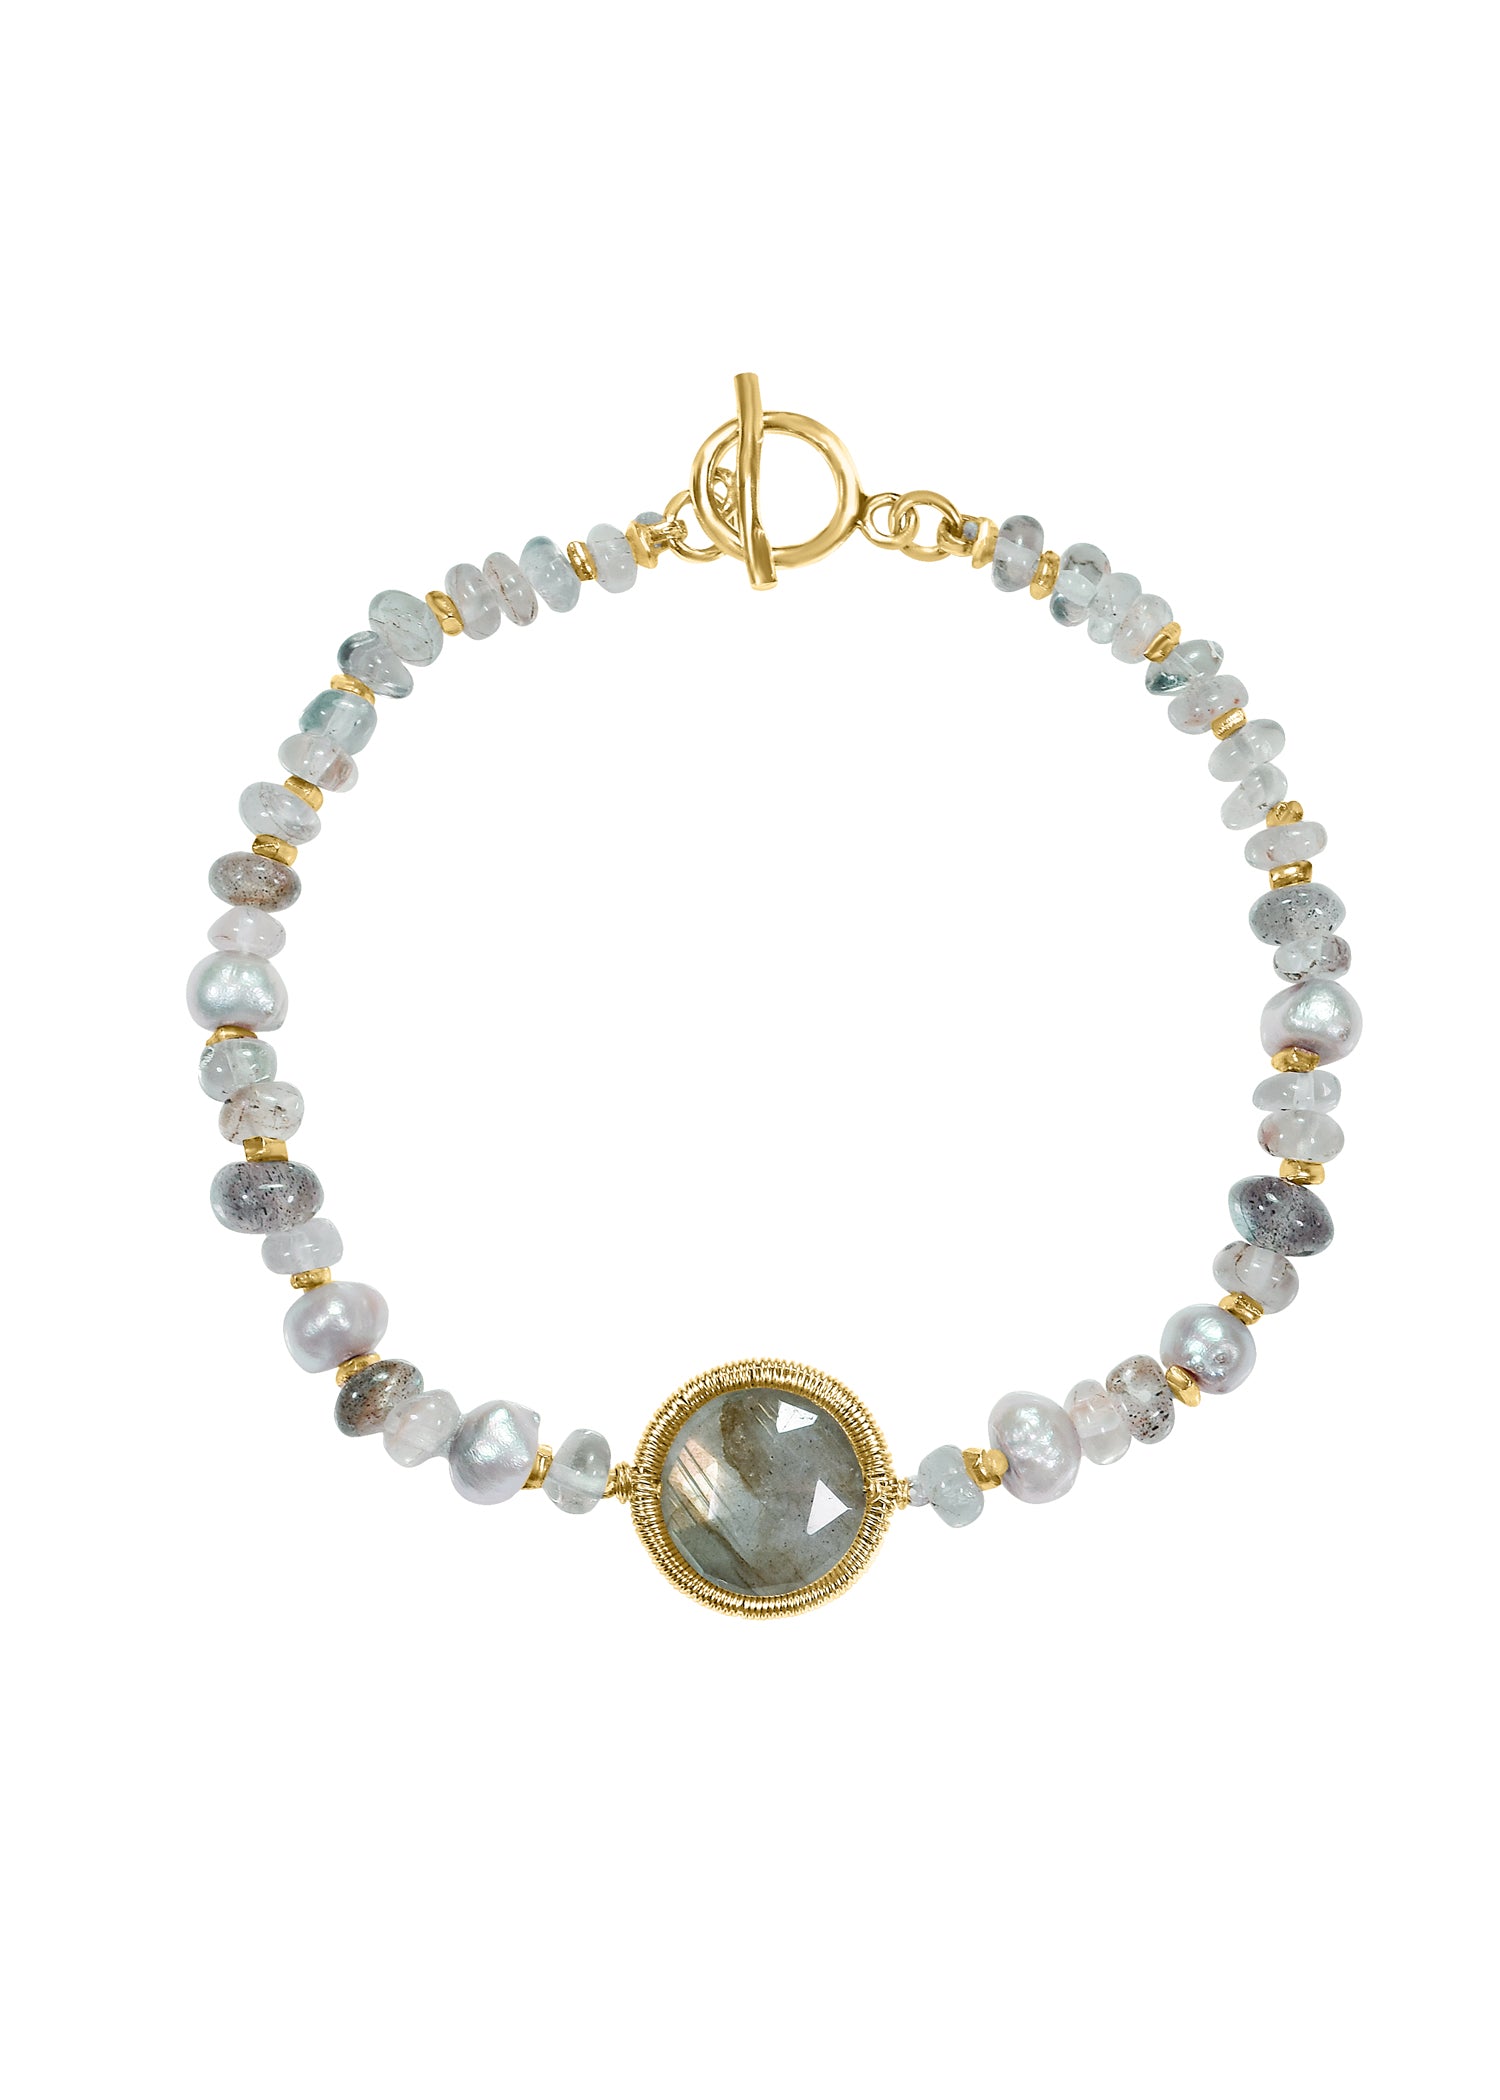 Labradorite Moss aquamarine Freshwater pearl 14k gold fill Pendant measures 1/2" in diameter. Total length is 7" Handmade in Los Angeles